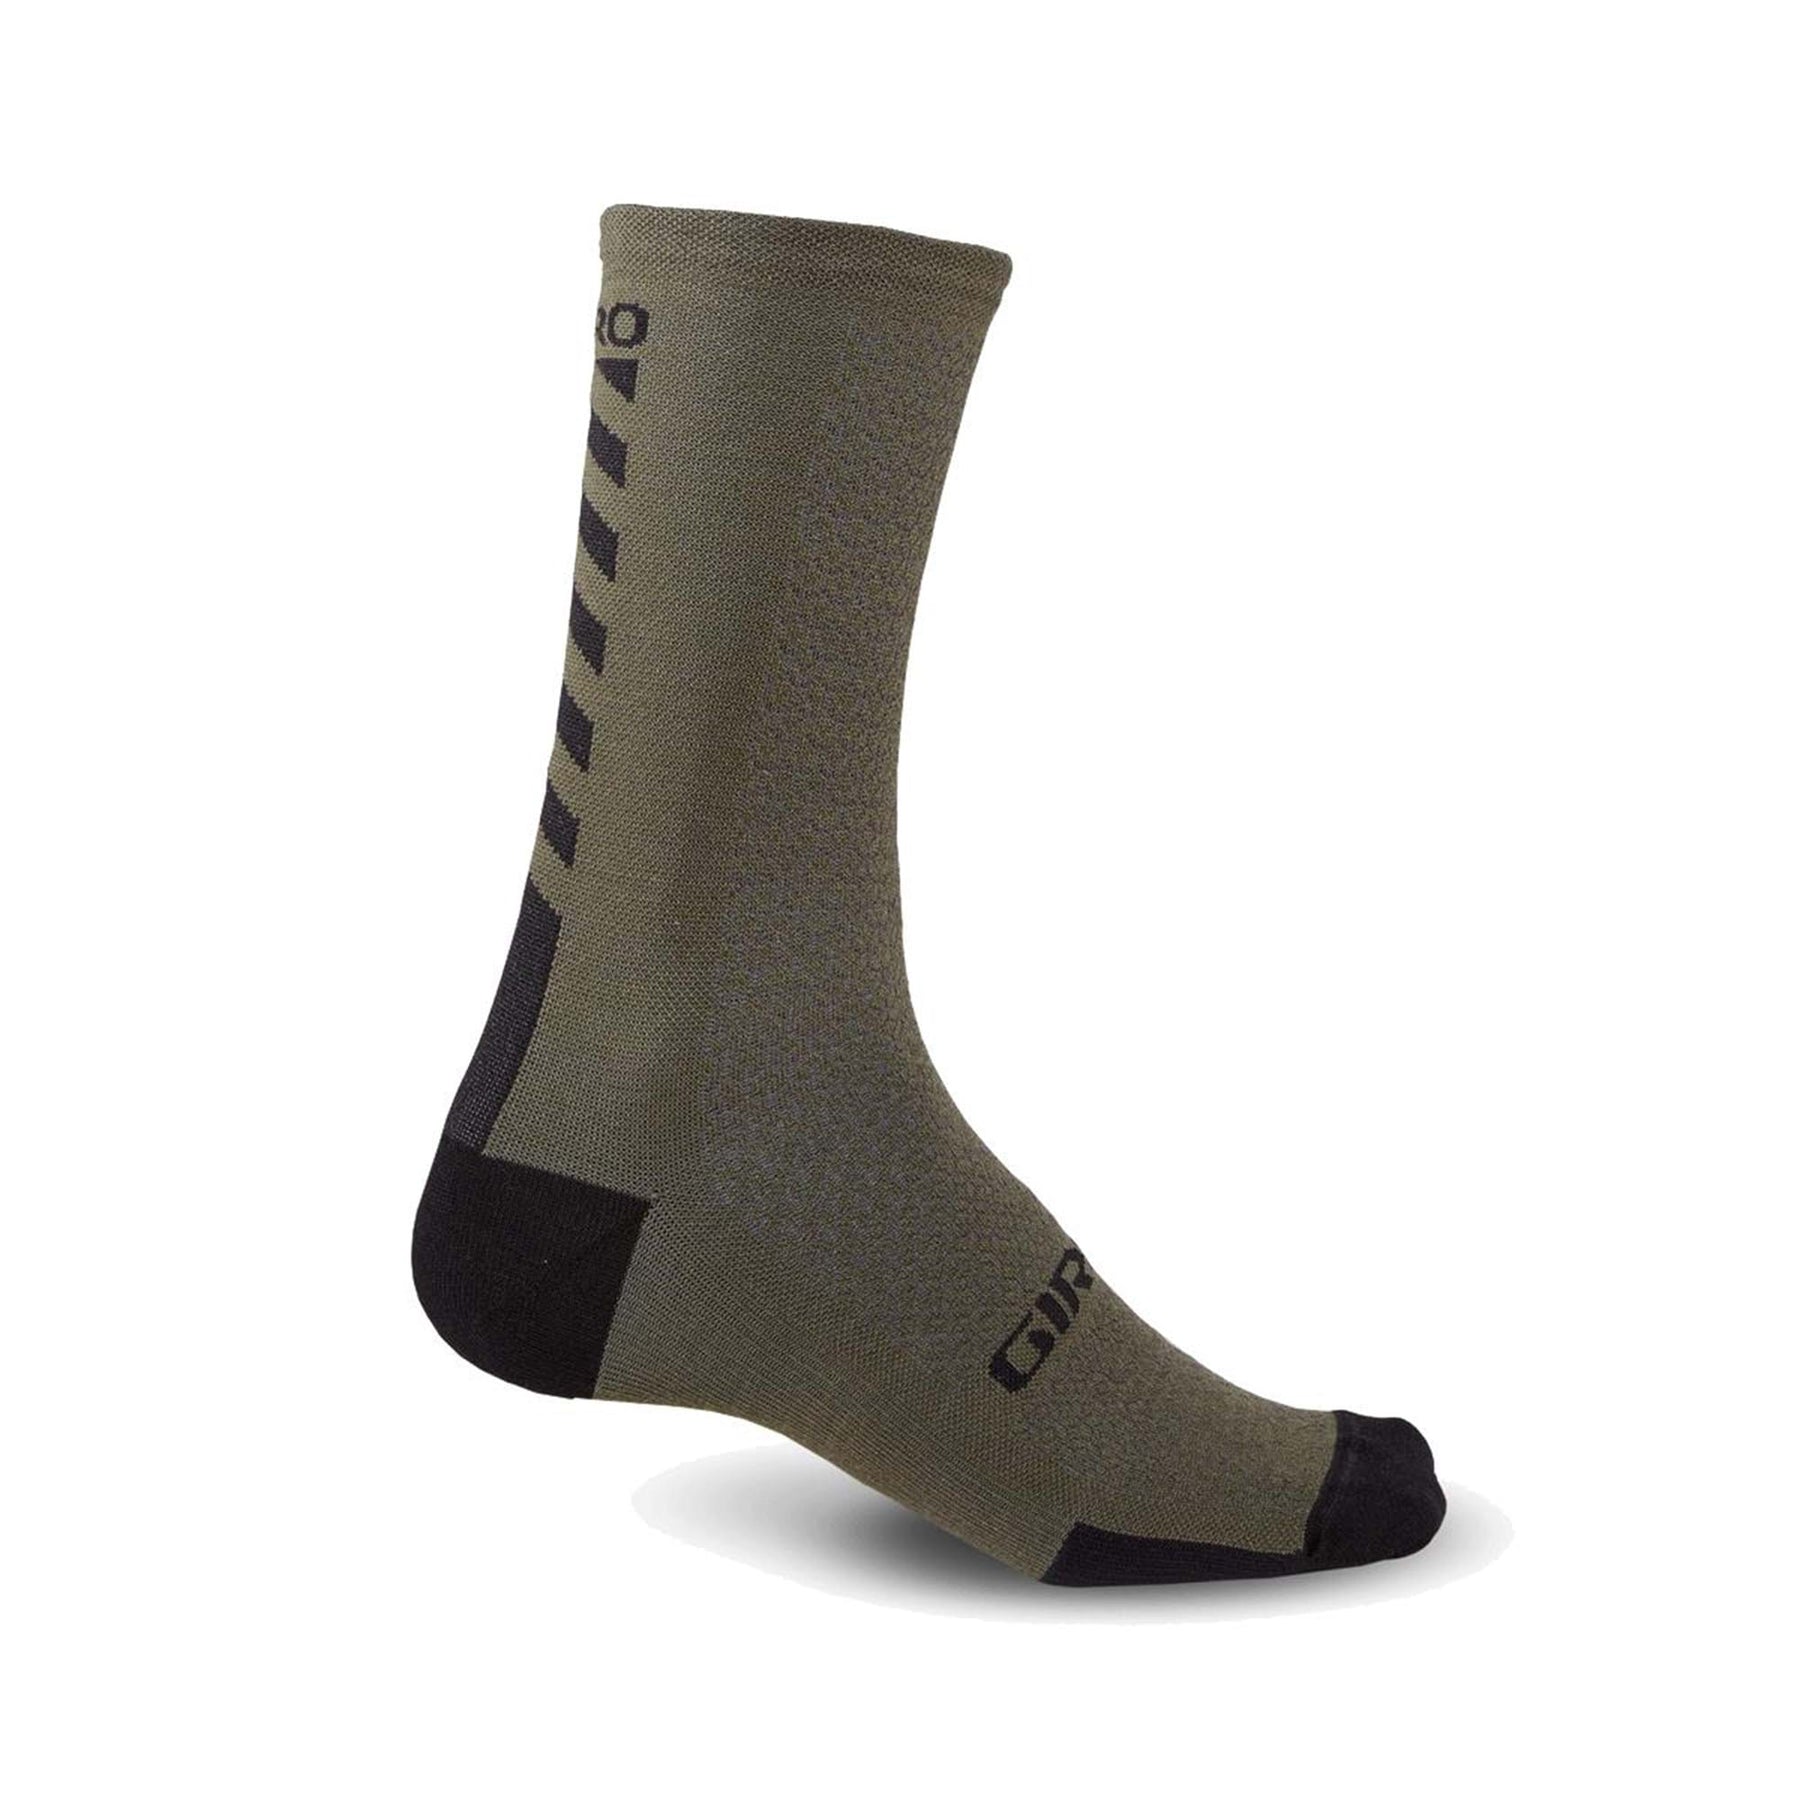 Giro Hrc+ Merino Wool Cycling Socks